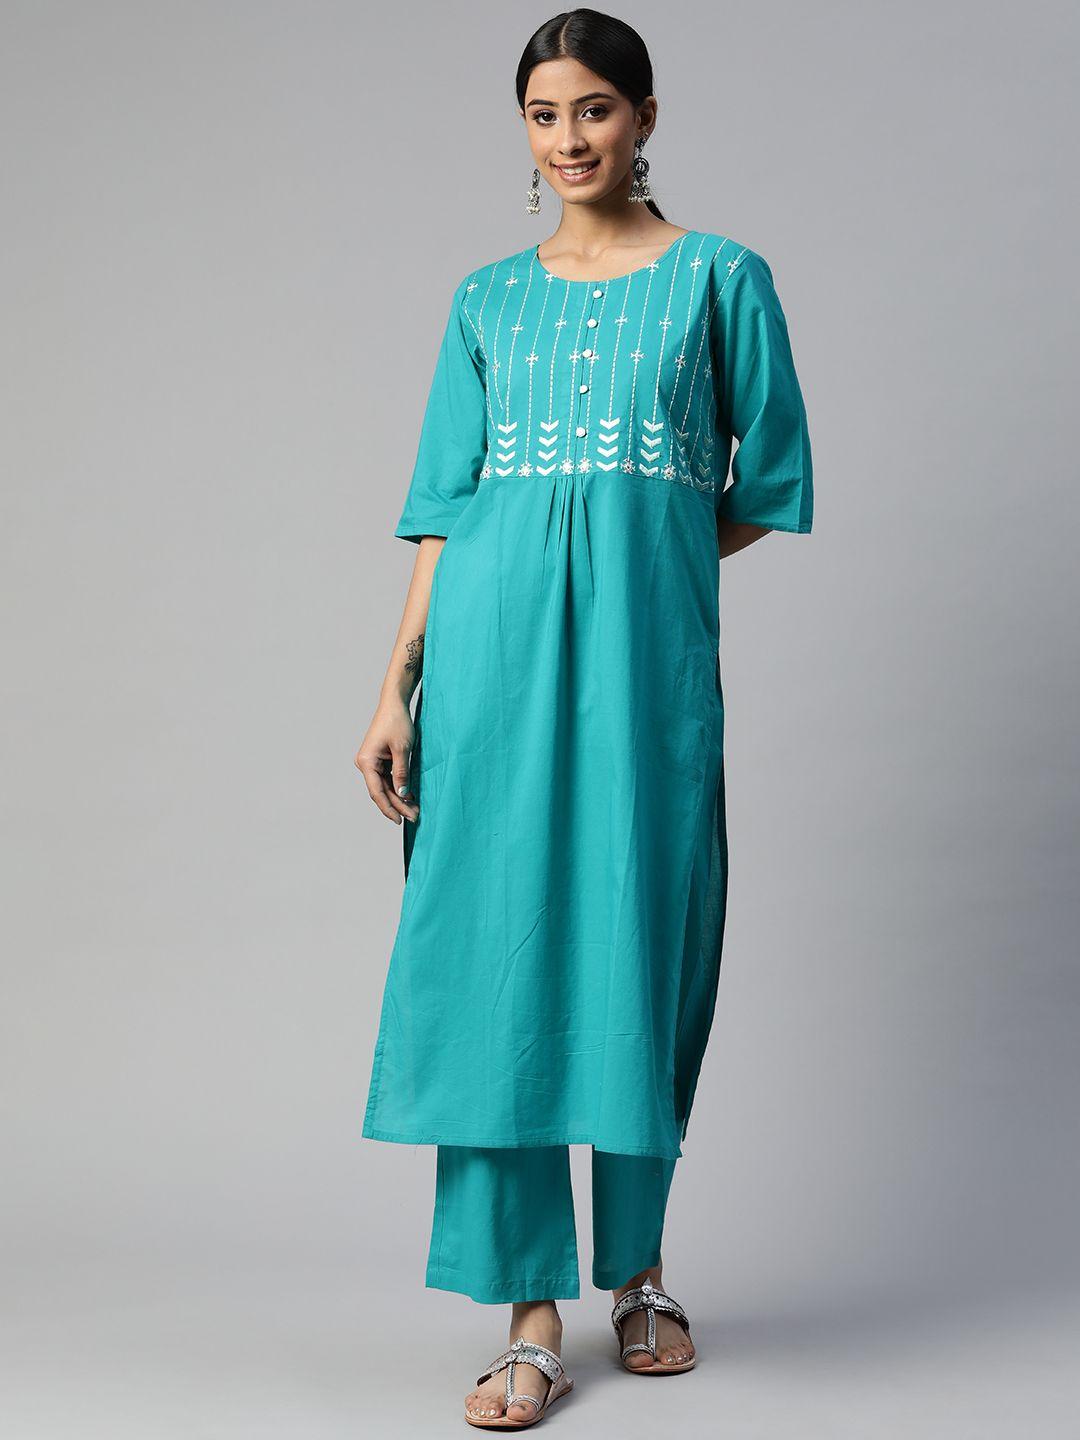 svarchi women turquoise blue ethnic motifs embroidered empire thread work pure cotton kurta with palazzos